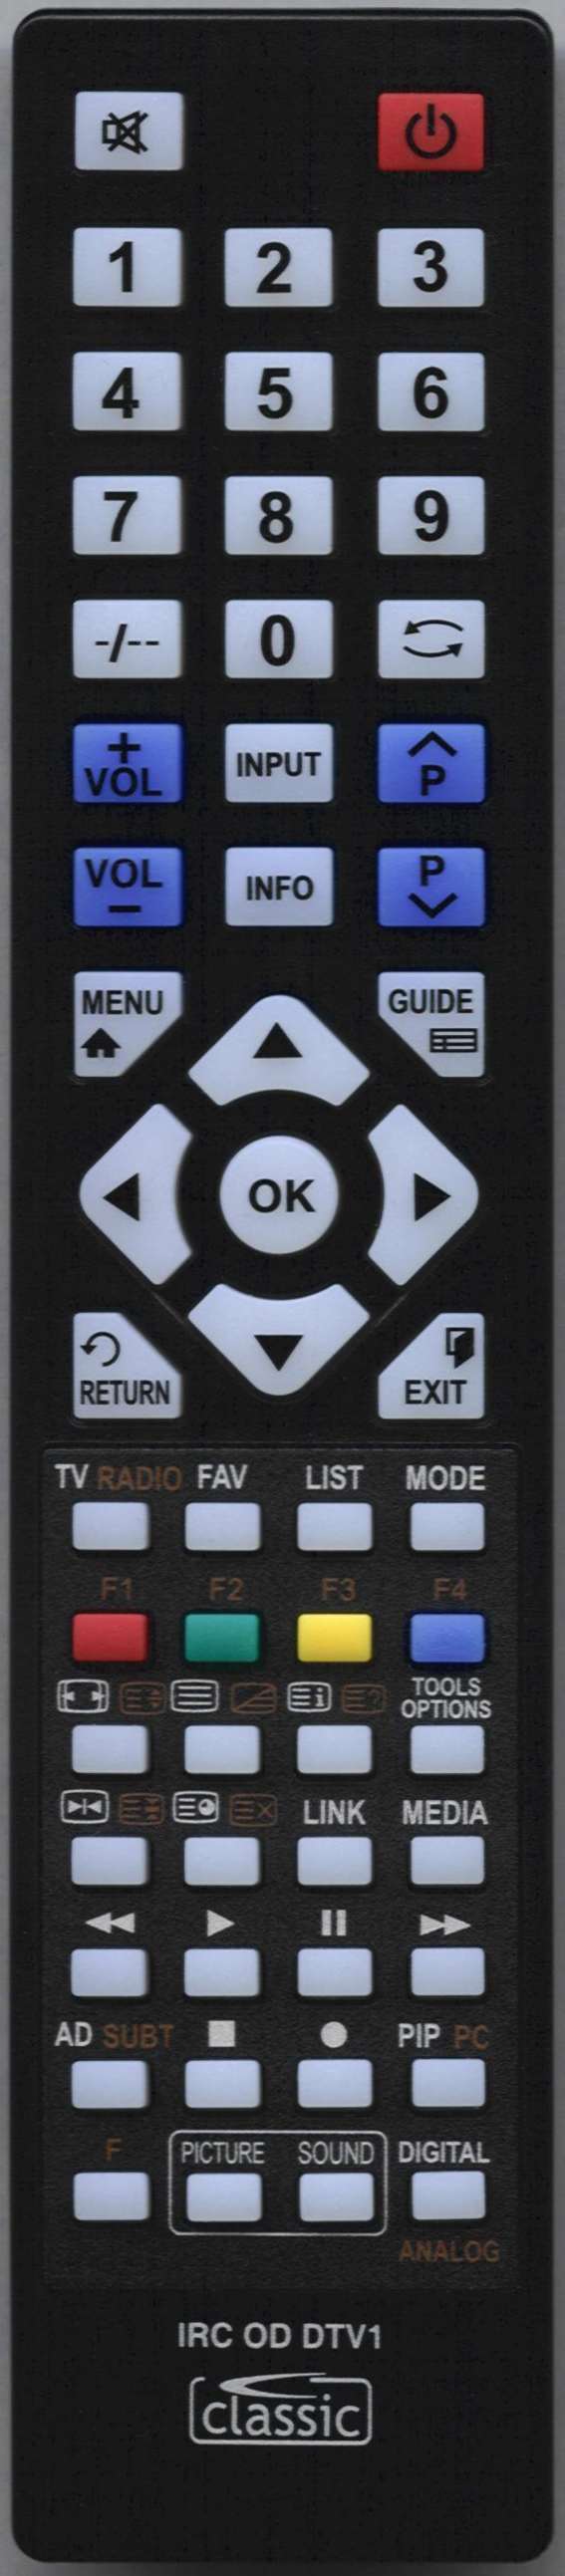 JVC RM-C1504 Remote Control Alternative